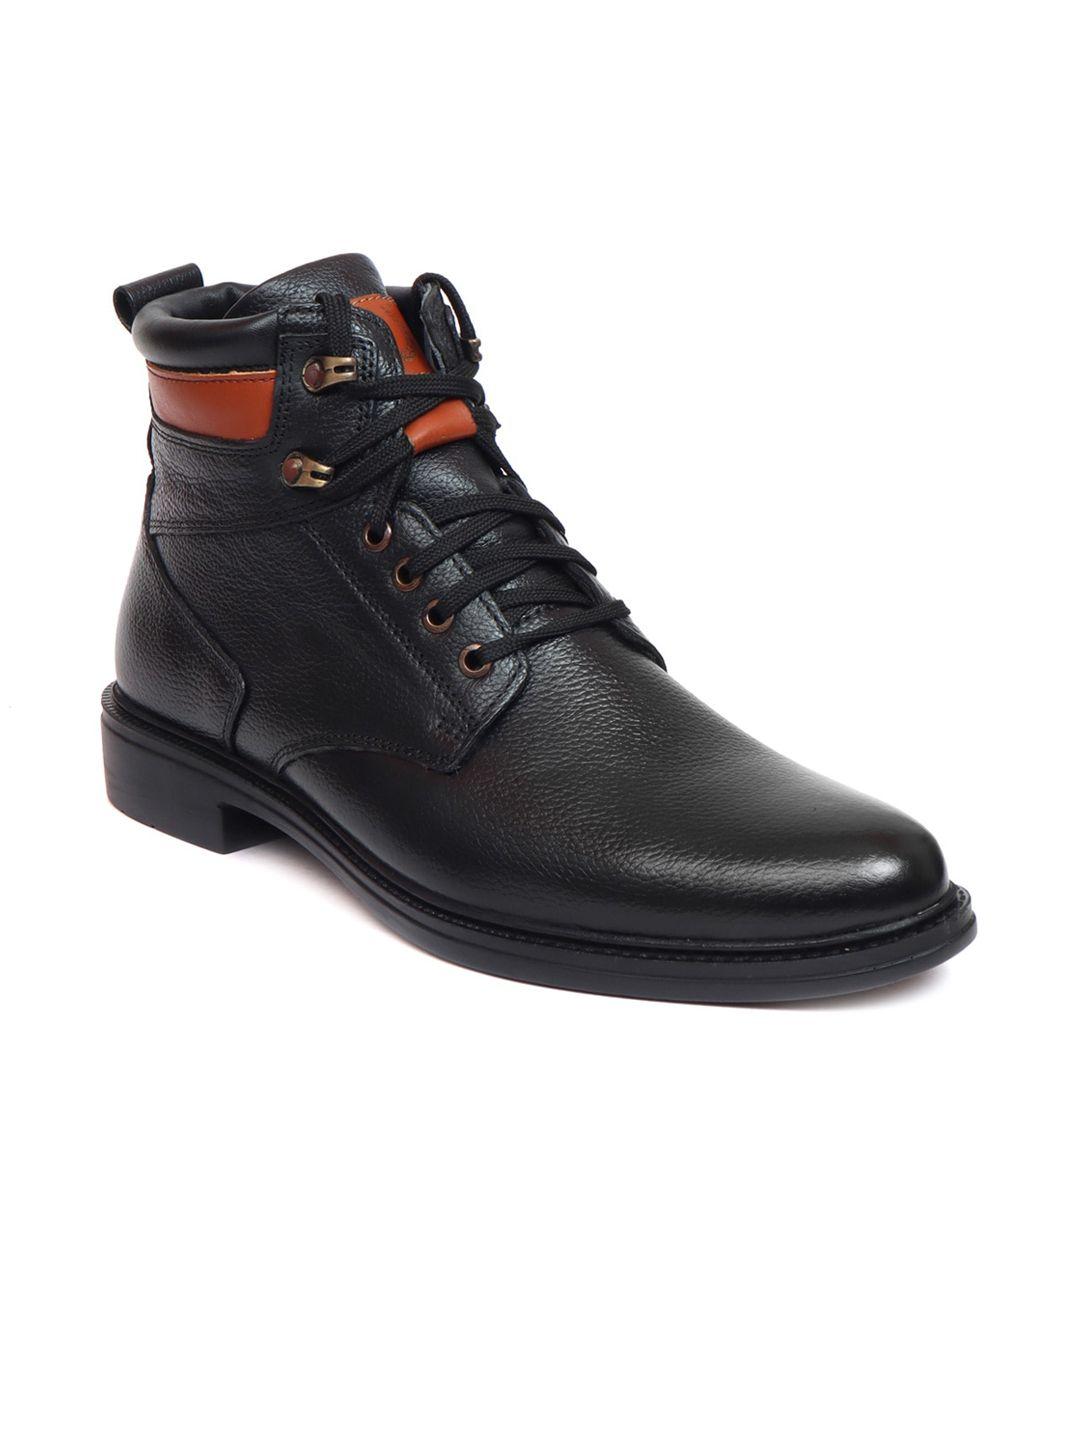 zoom shoes men black solid leather regular boots